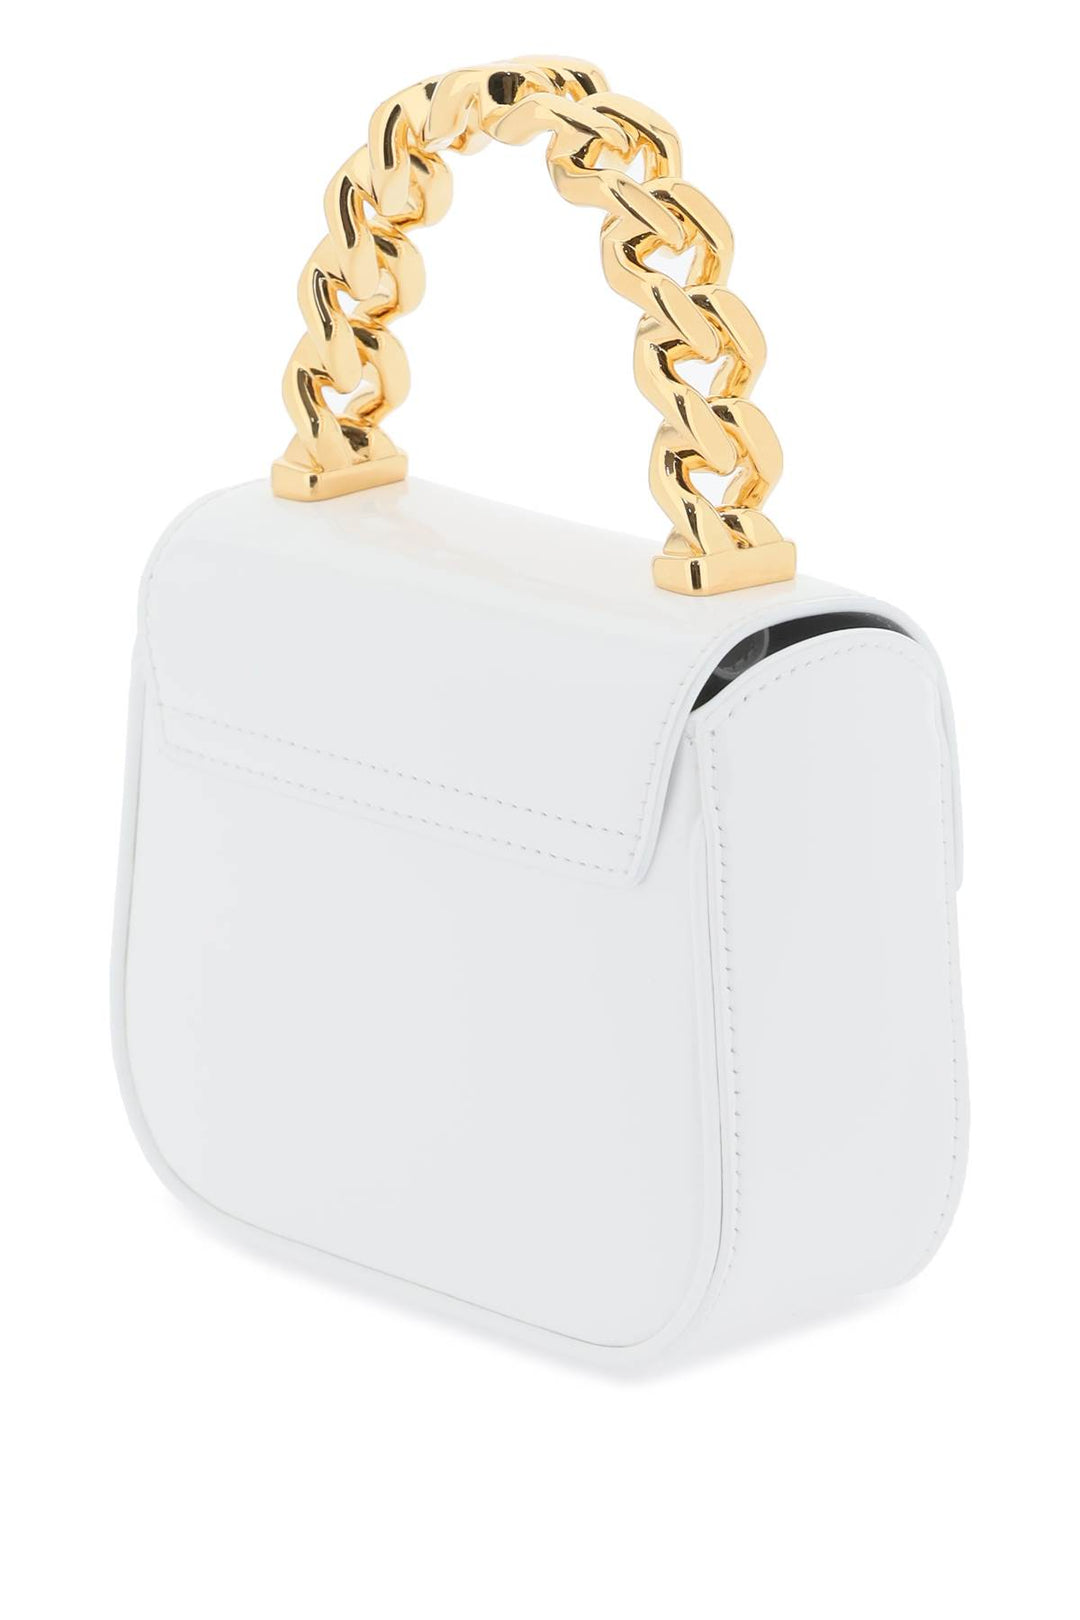 Versace Patent Leather 'La Medusa' Mini Bag   Bianco